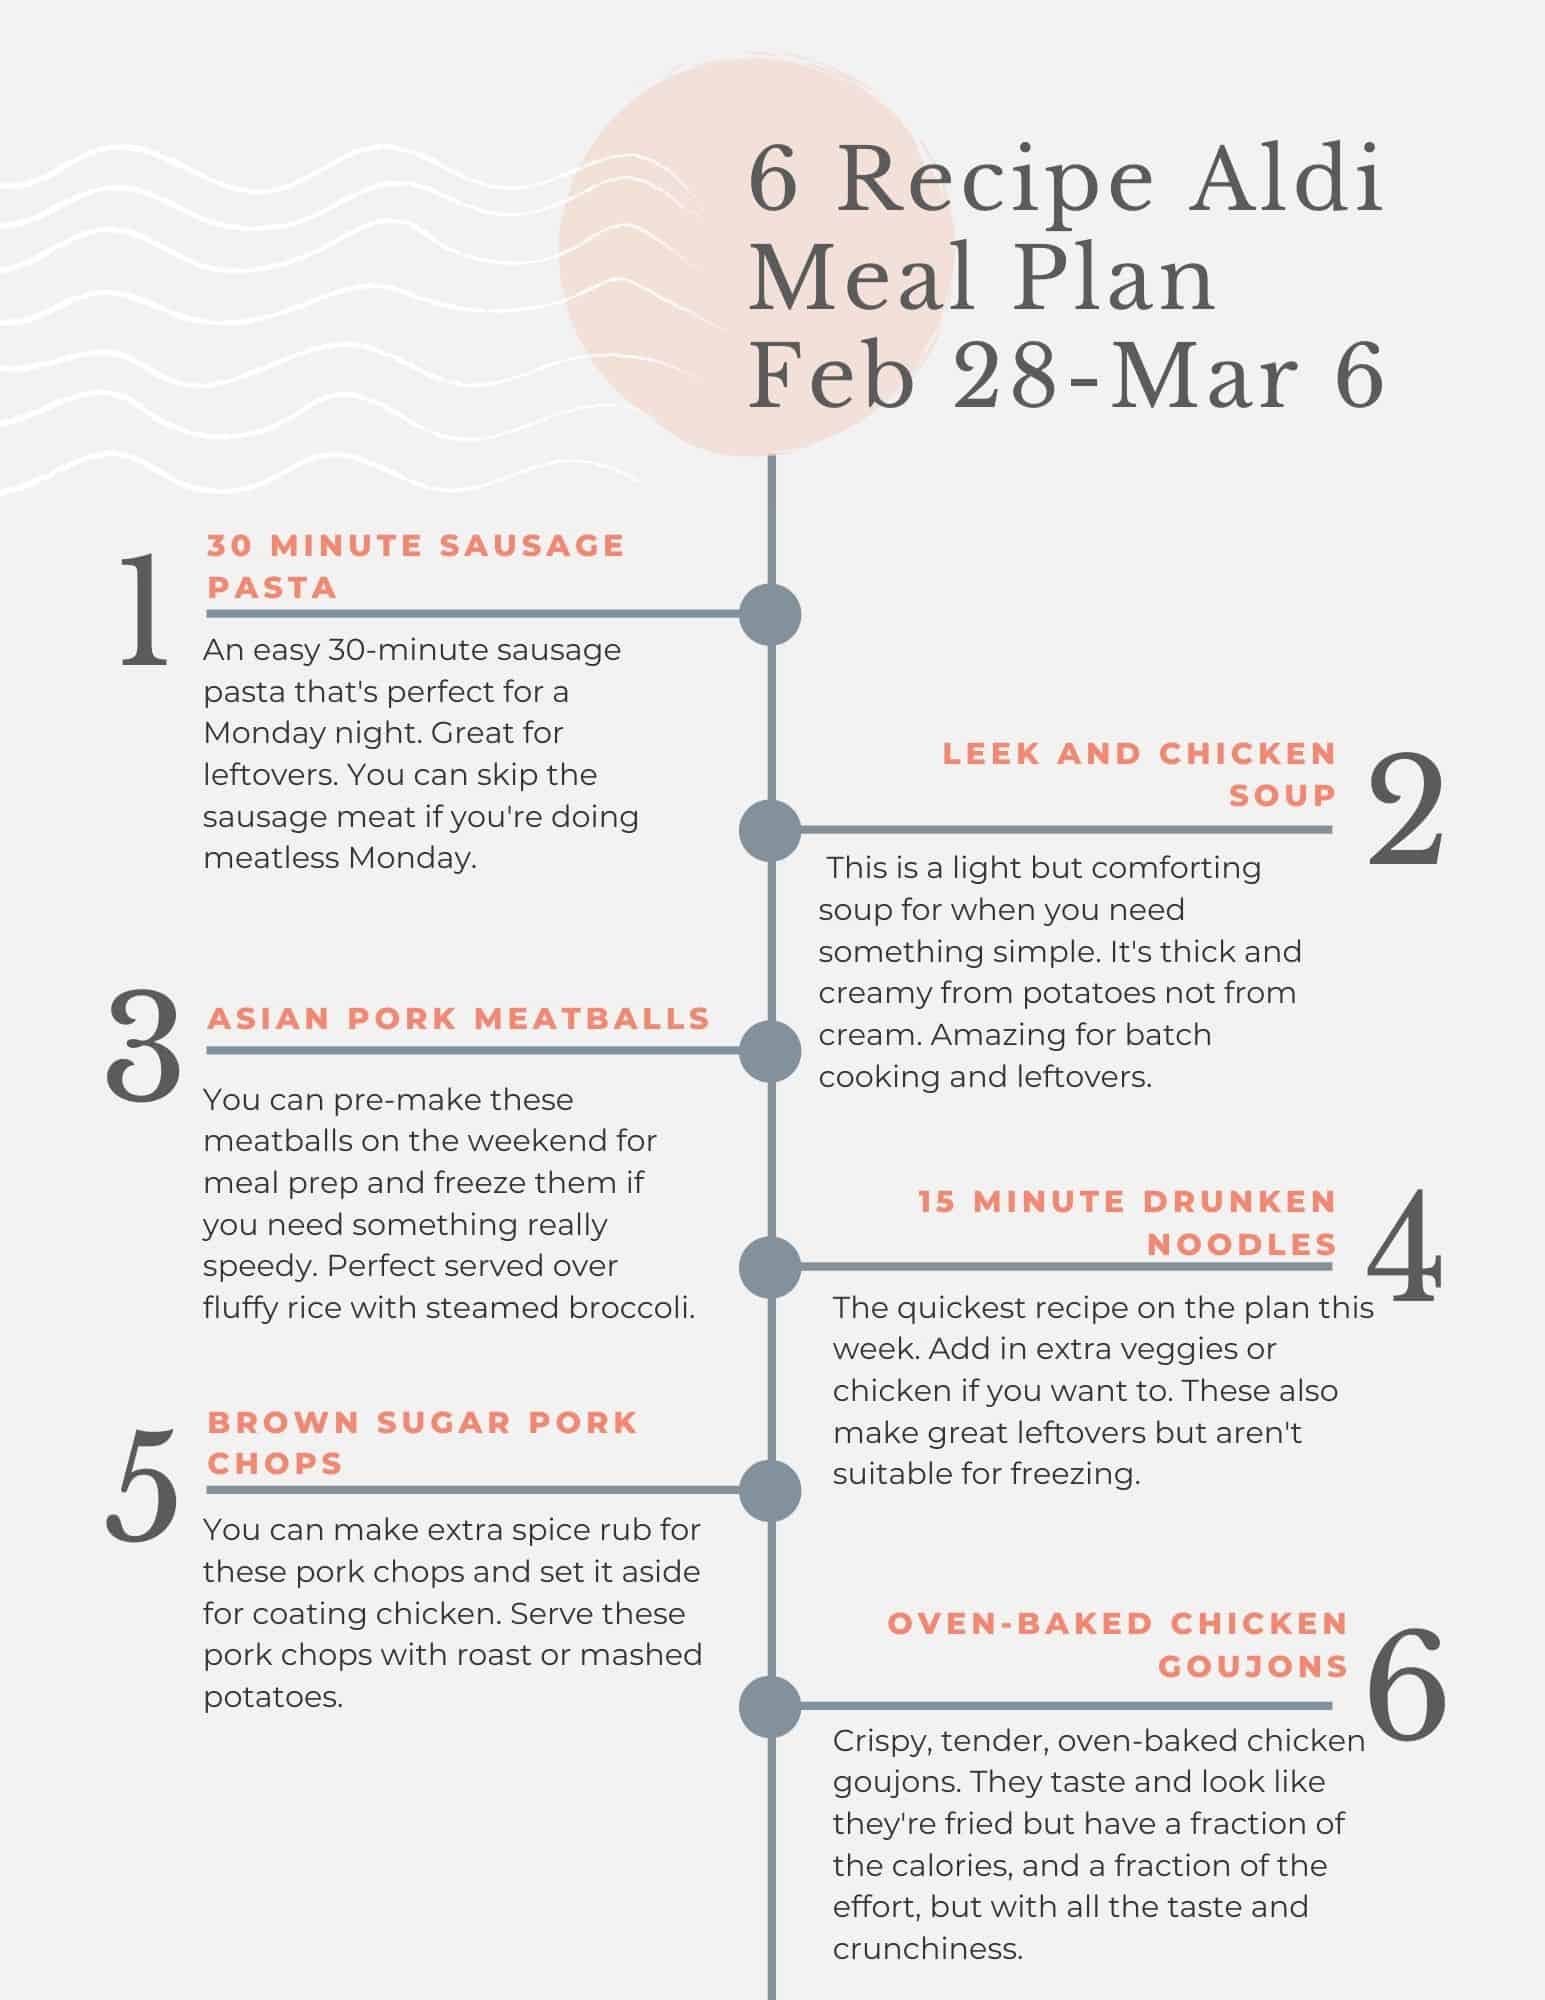 Aldi budget meal plan Feb 28 